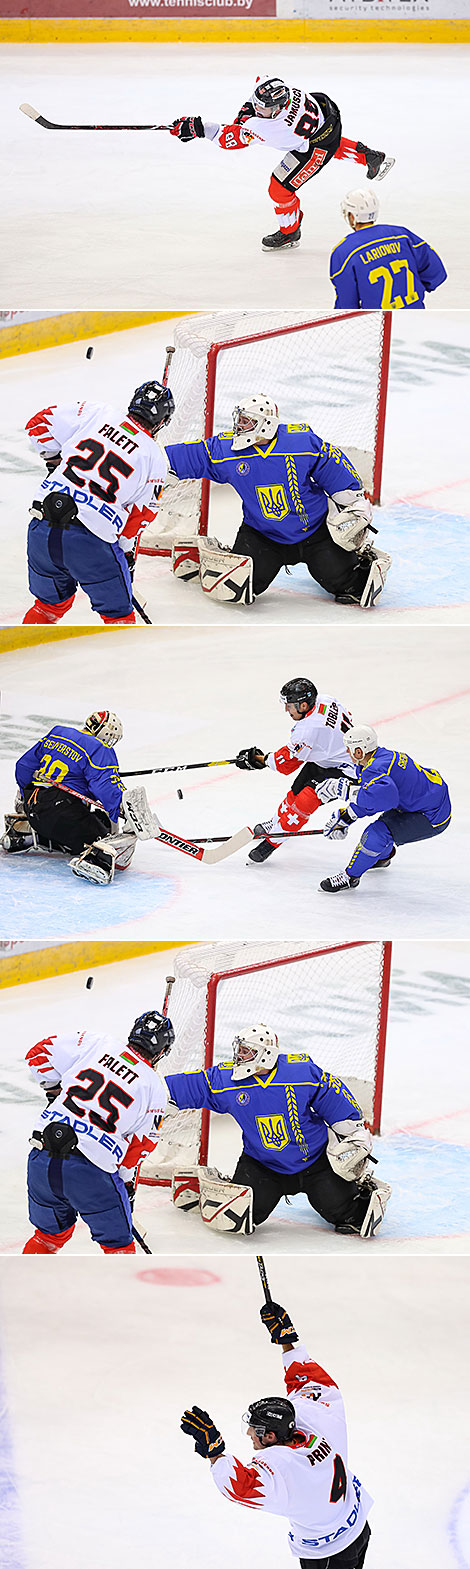 Minsk Christmas Amateur Ice Hockey Tournament: Ukraine v Switzerland